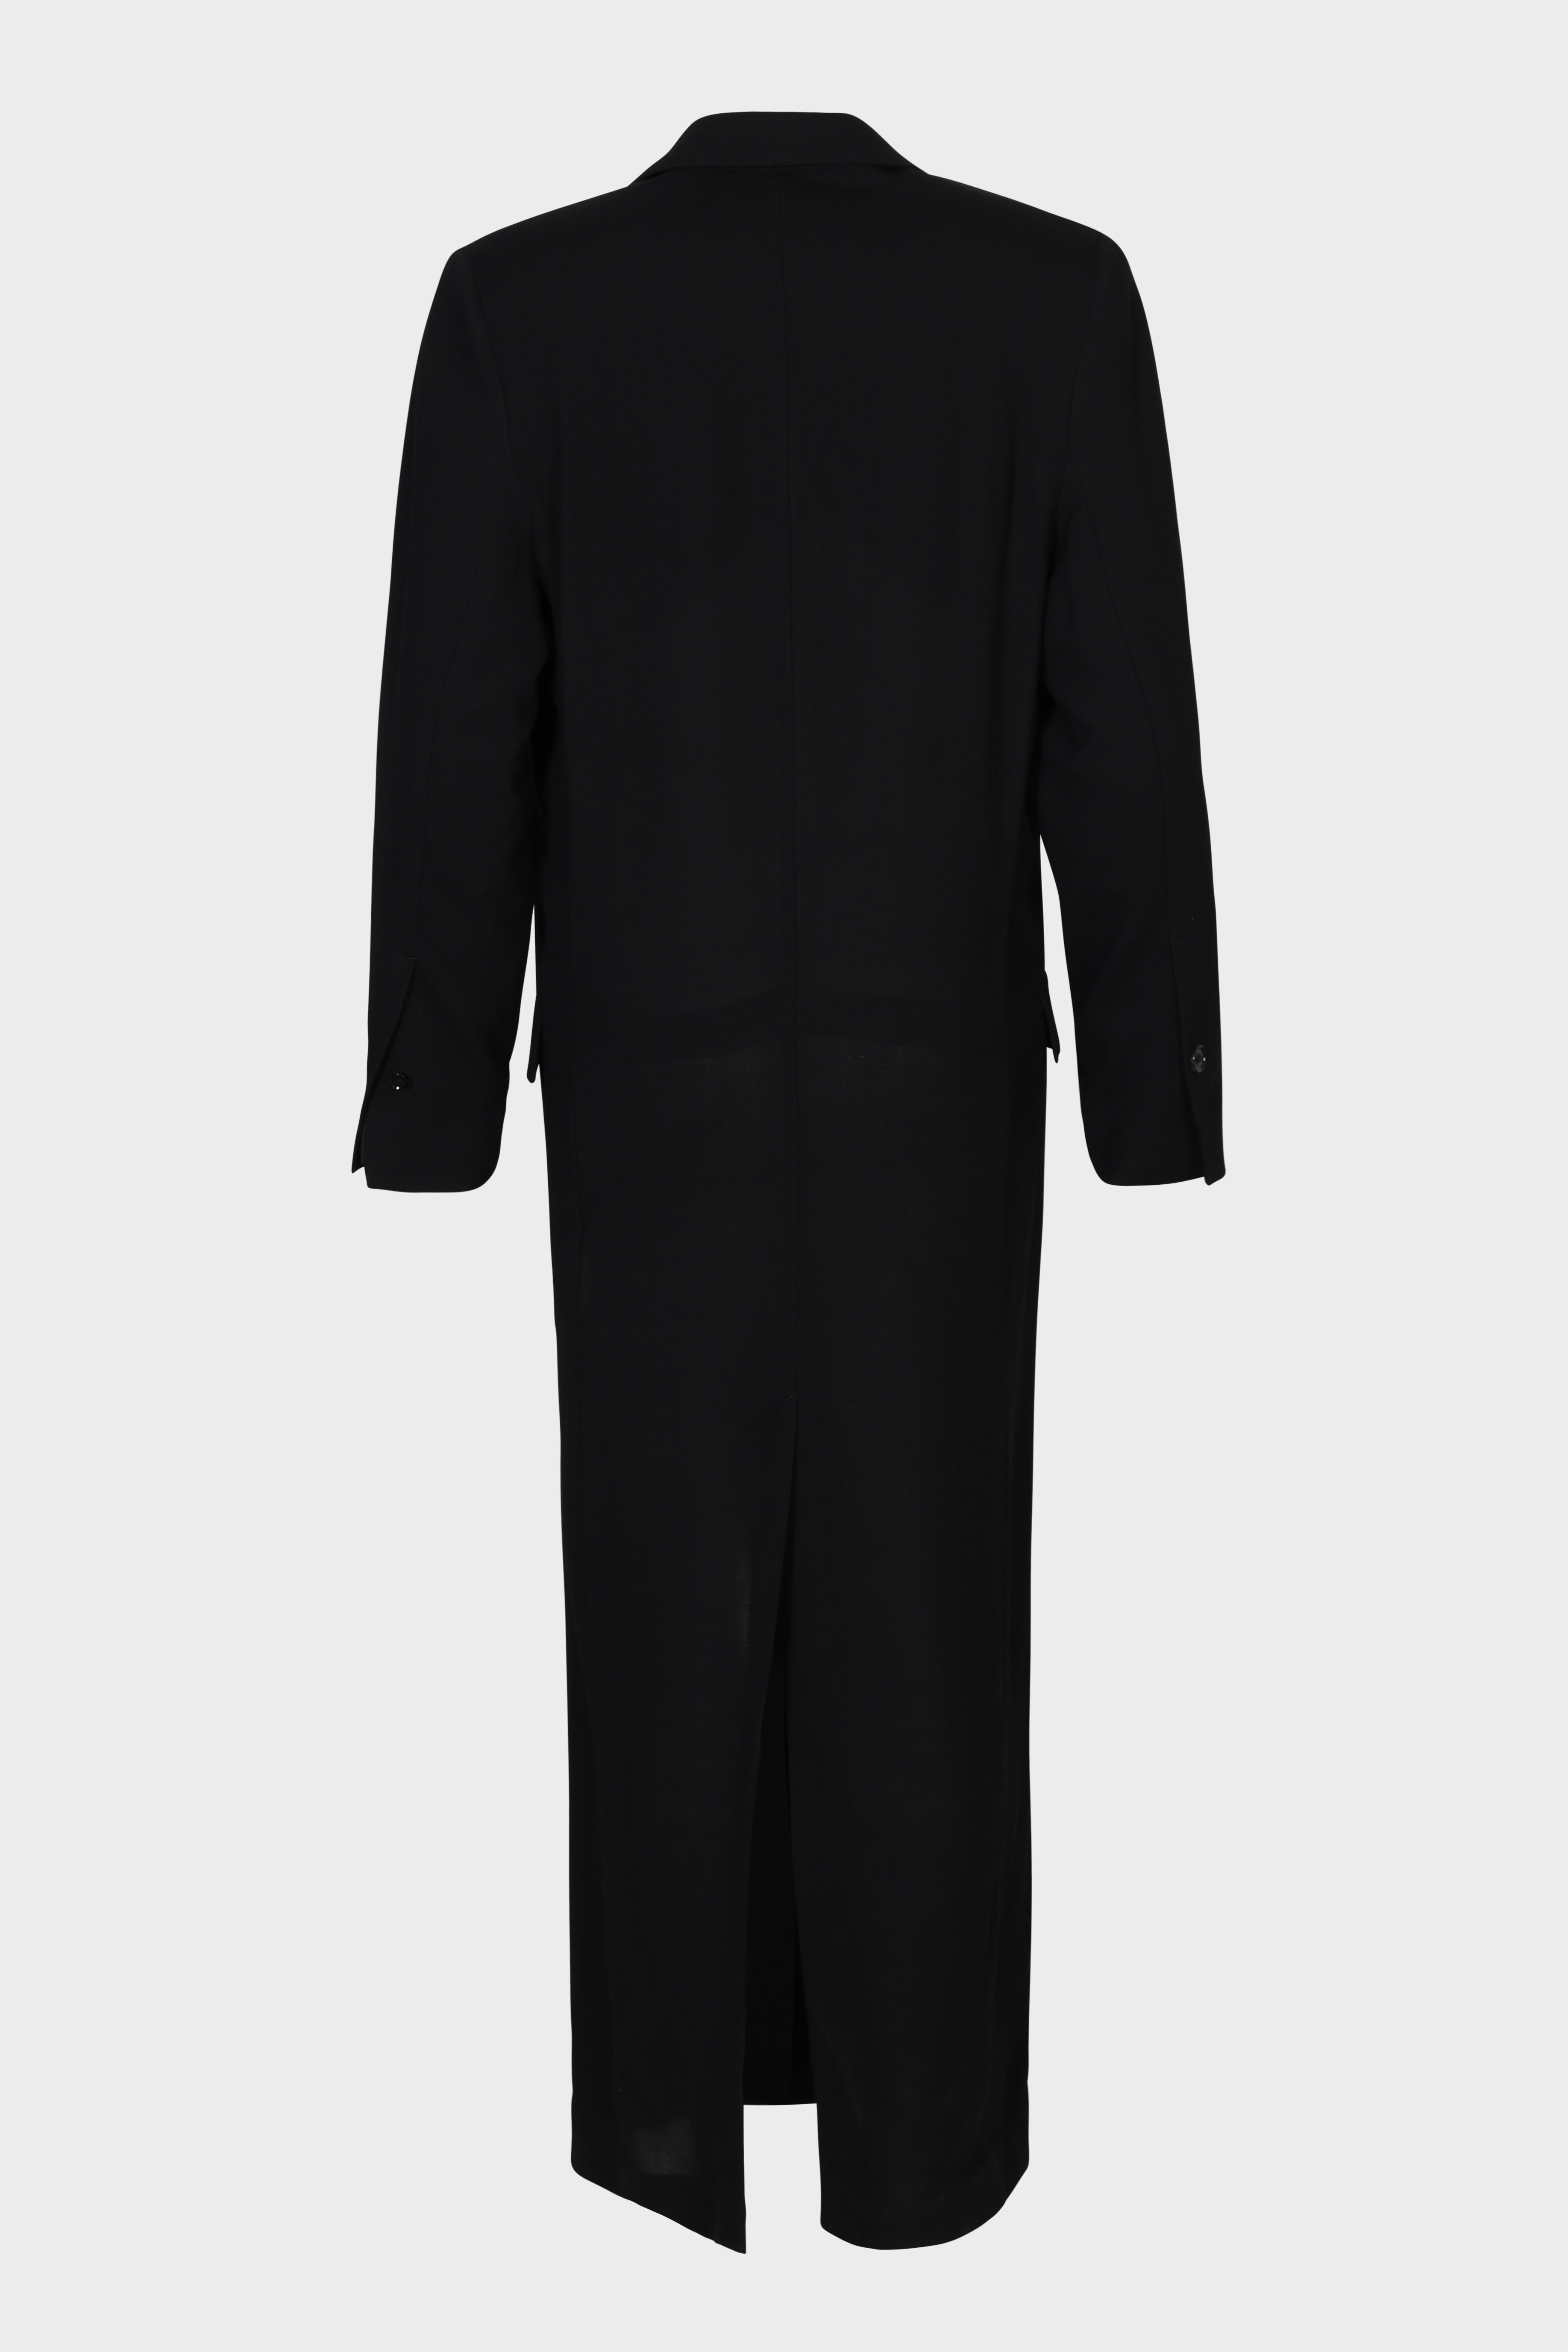 AMI PARIS Gabardine Coat Dress in Black